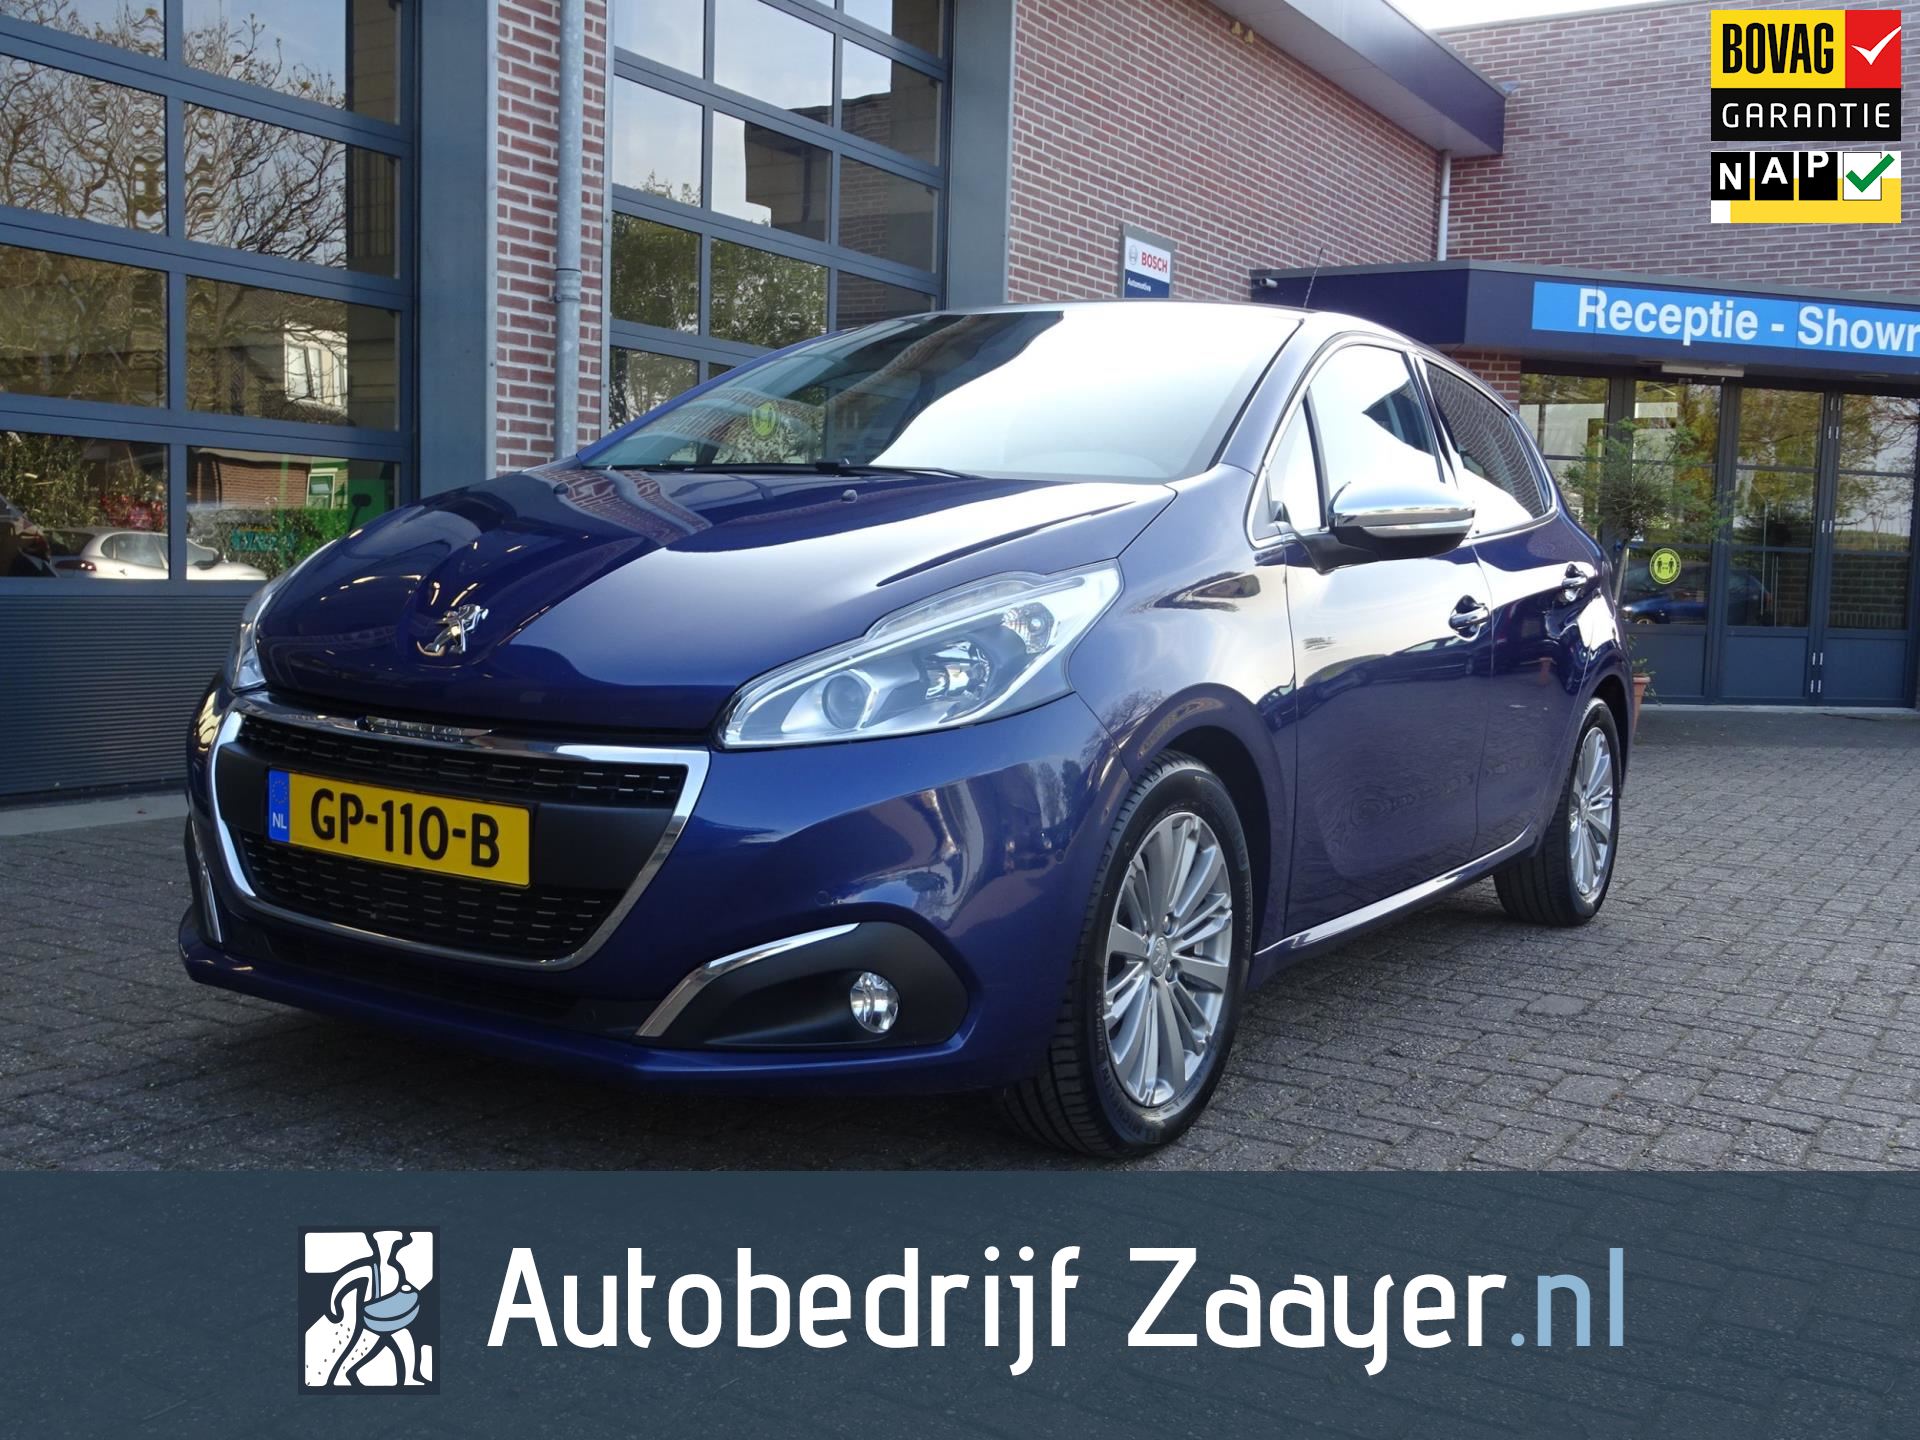 Verzorger patrouille Daarom Peugeot 208 - 1.2 PureTech Blue Lease Premium mooie auto Benzine uit 2015 -  www.zaayer.nl